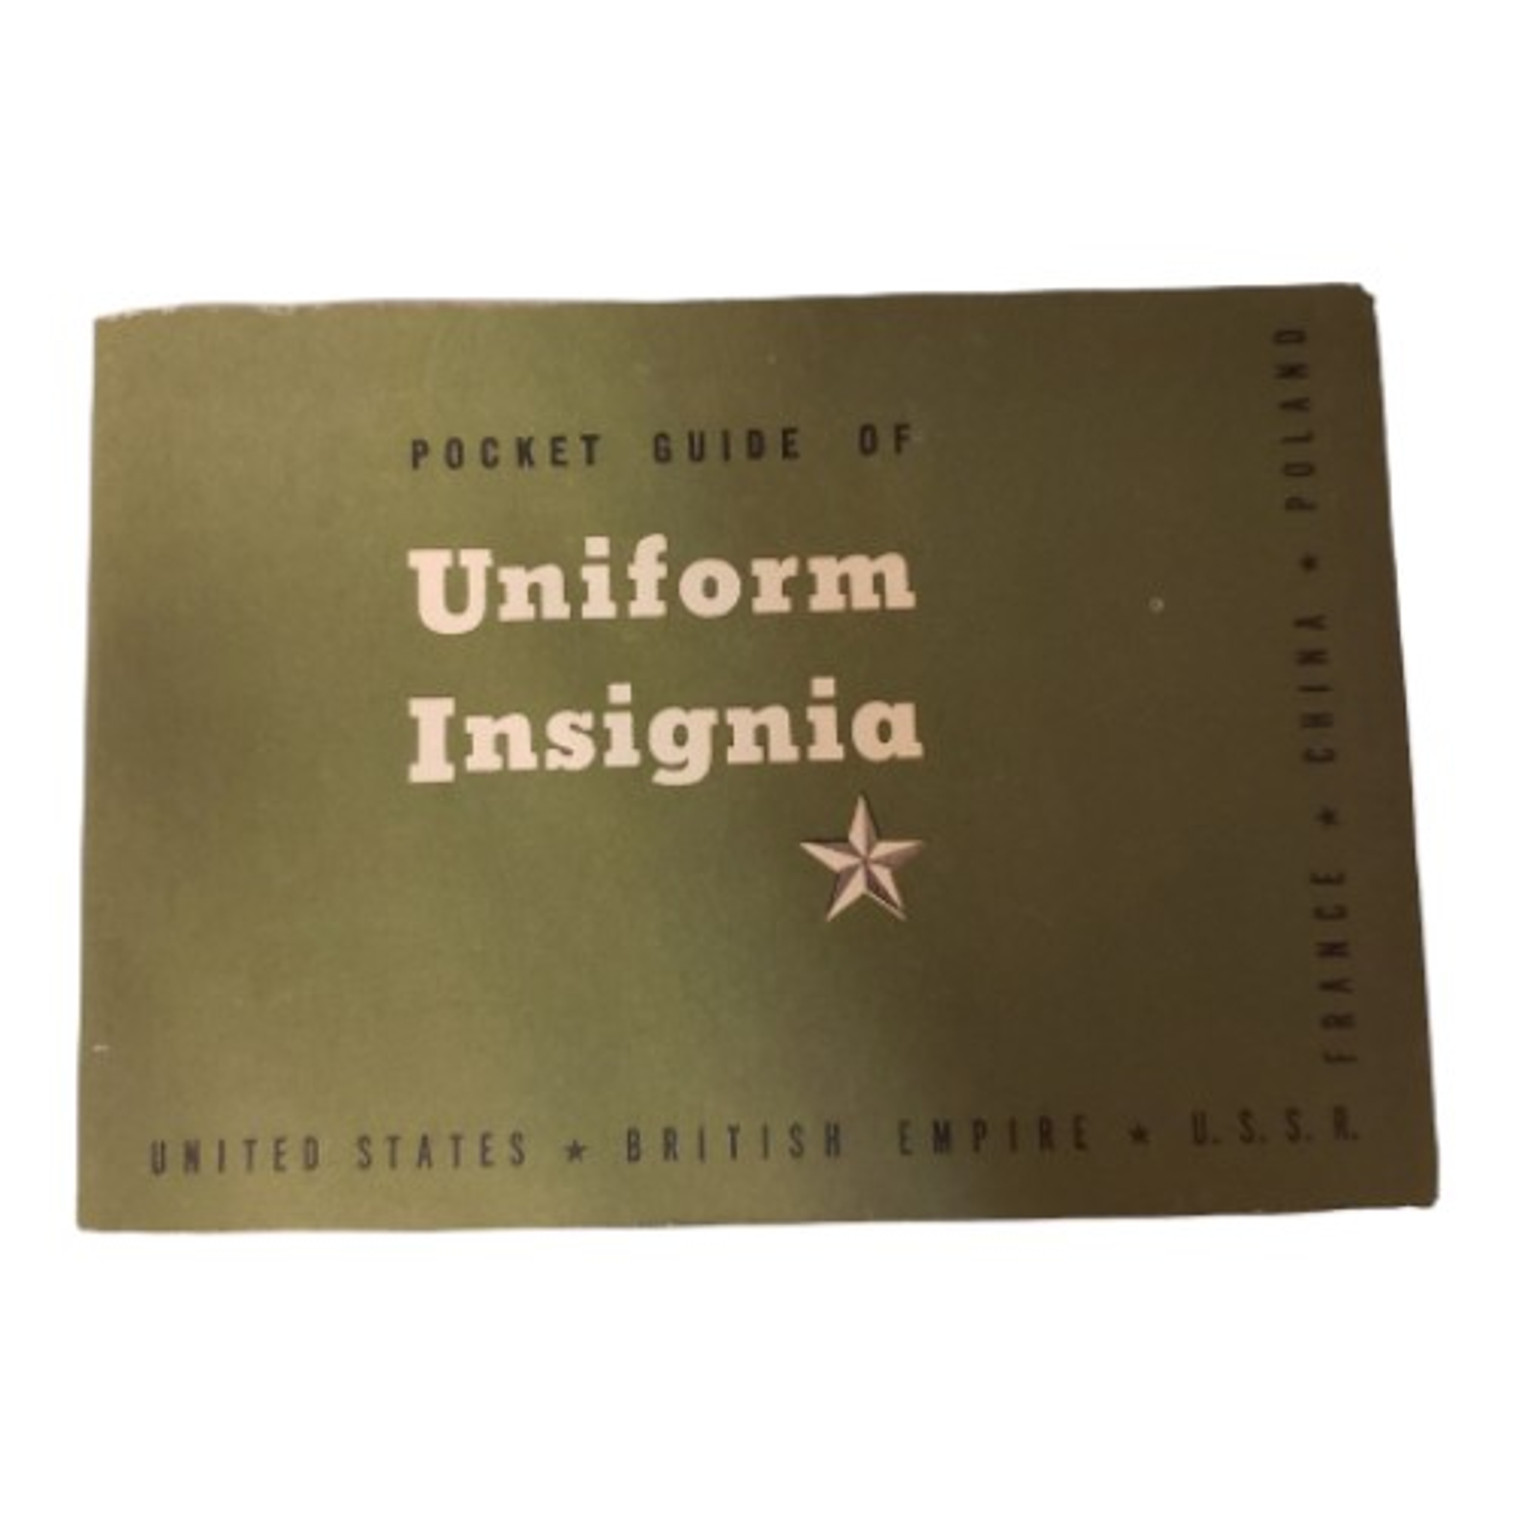 World War 2 Pocket Guide Of Uniform Insignia 1943 US